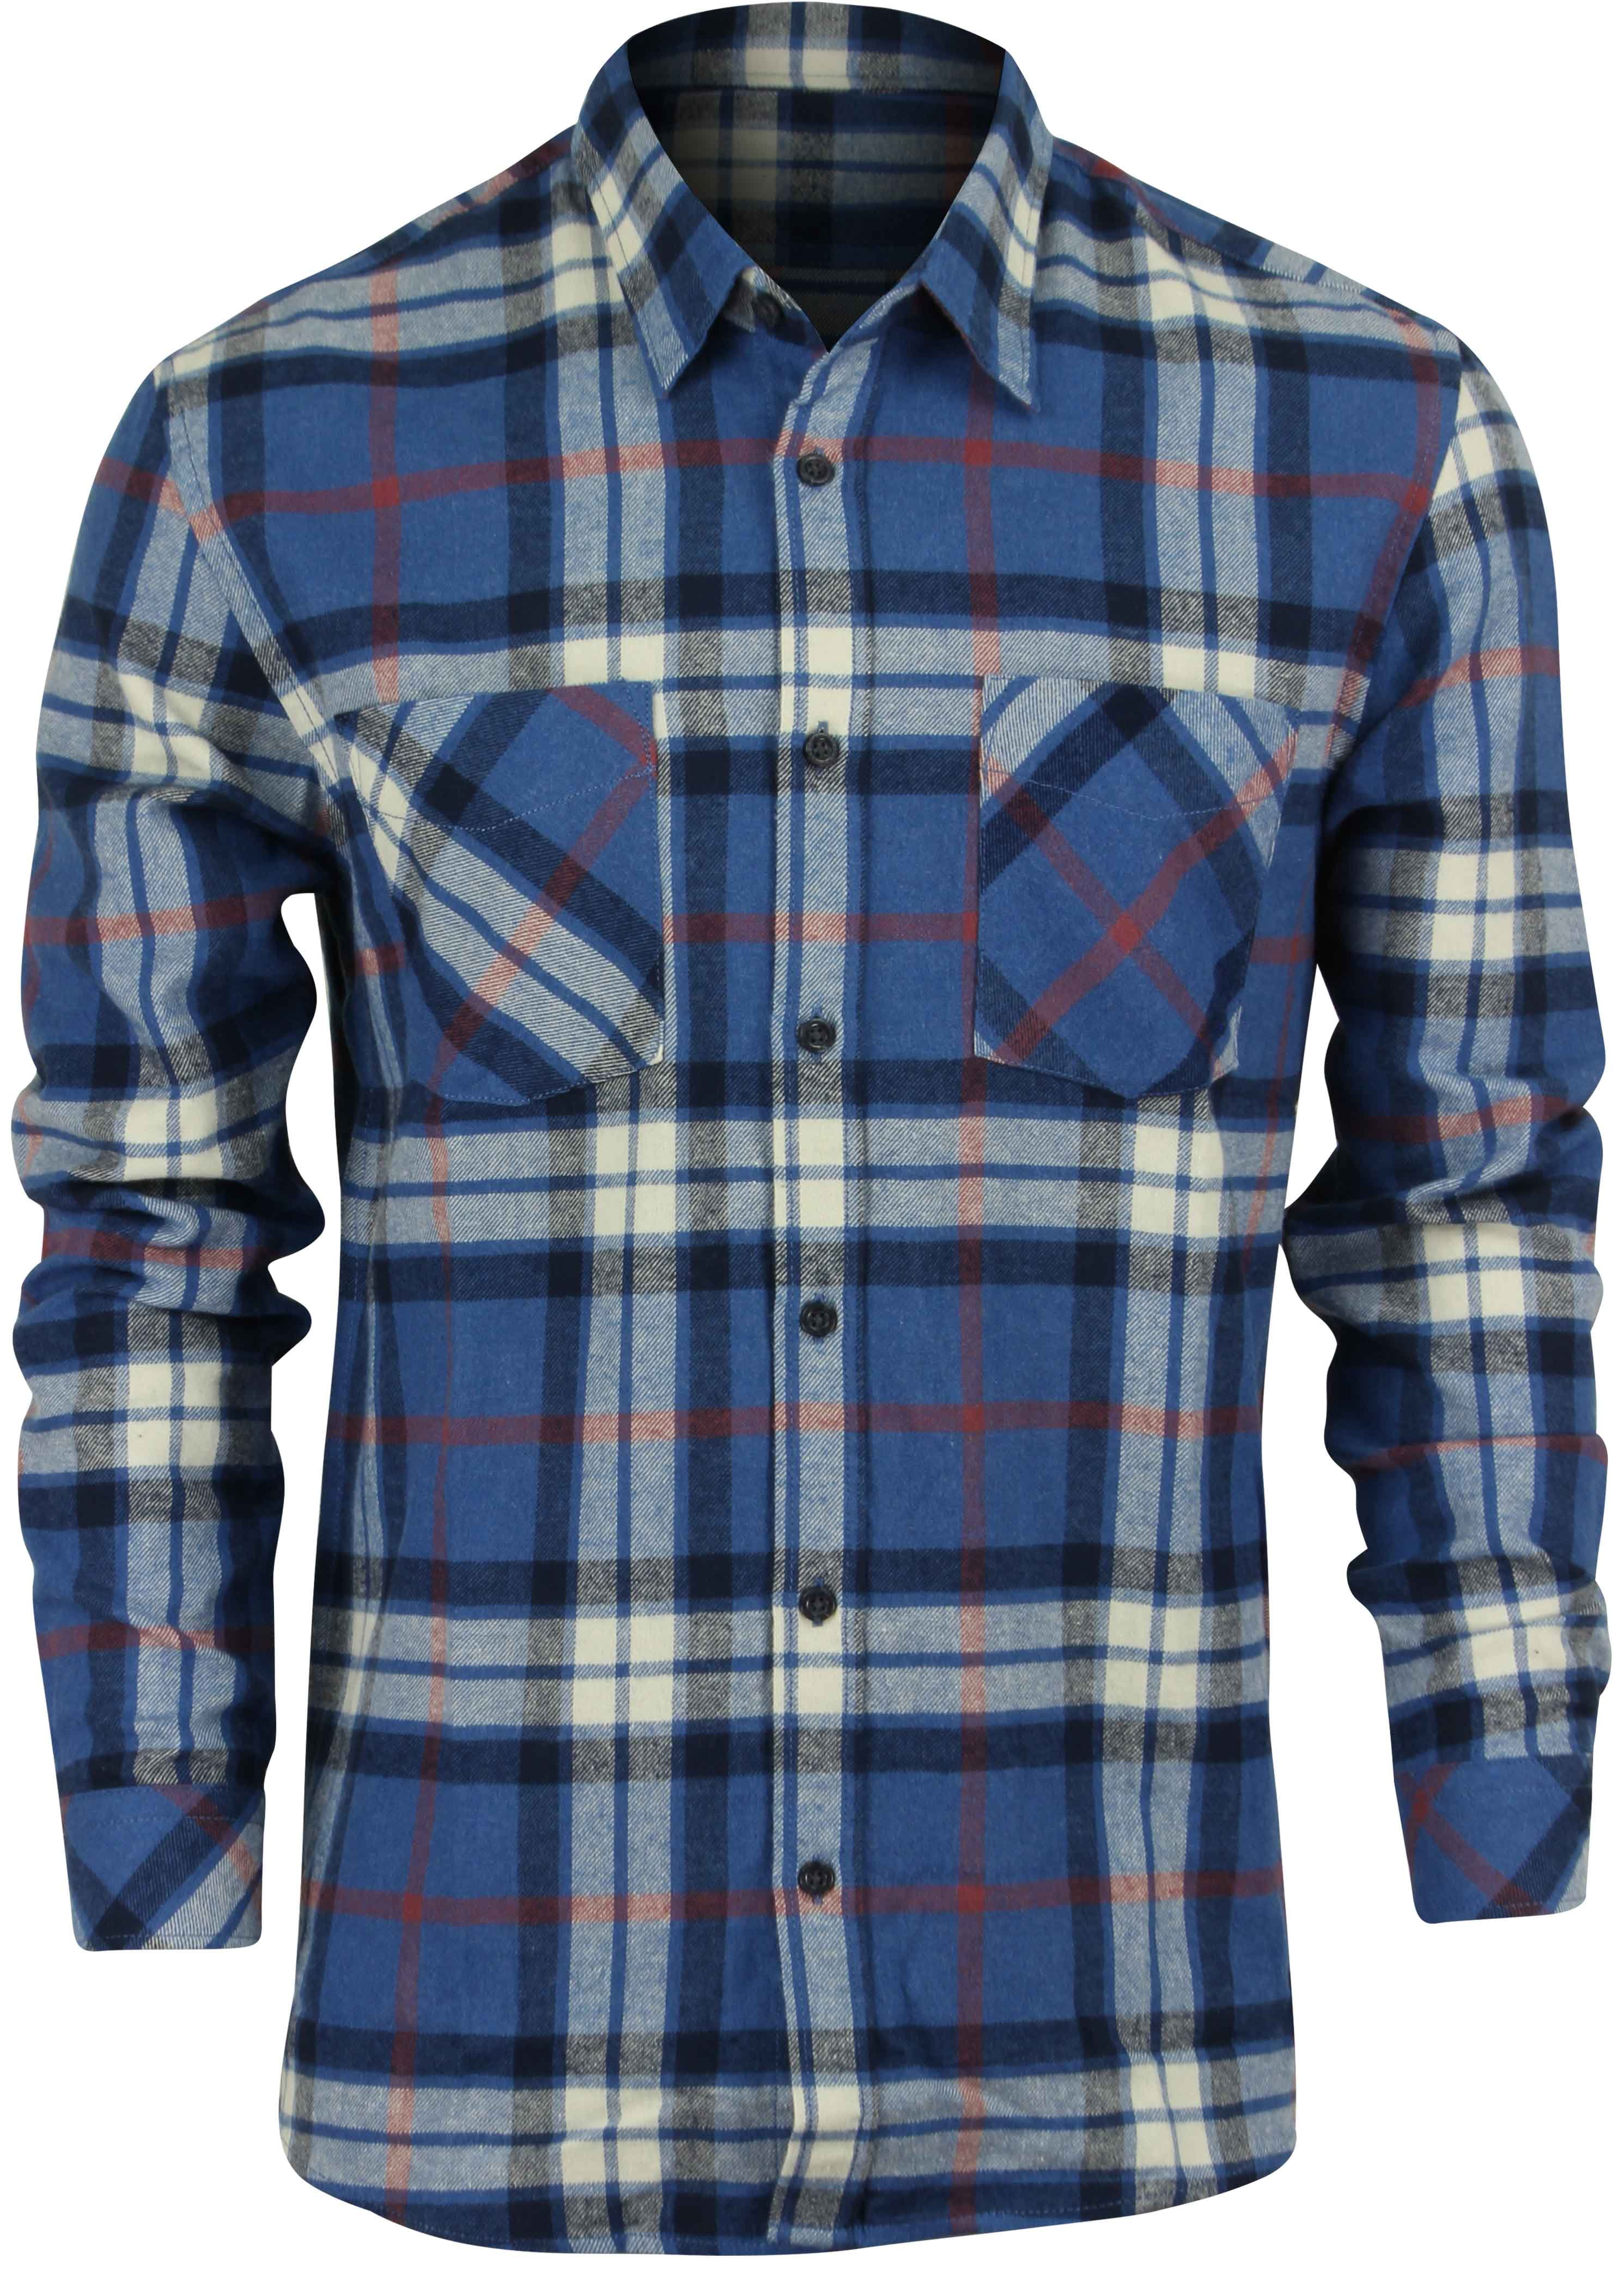 Quiksilver Mens Fitzthrower Long Sleeve Flannel Shirt - Saphire Blue ...